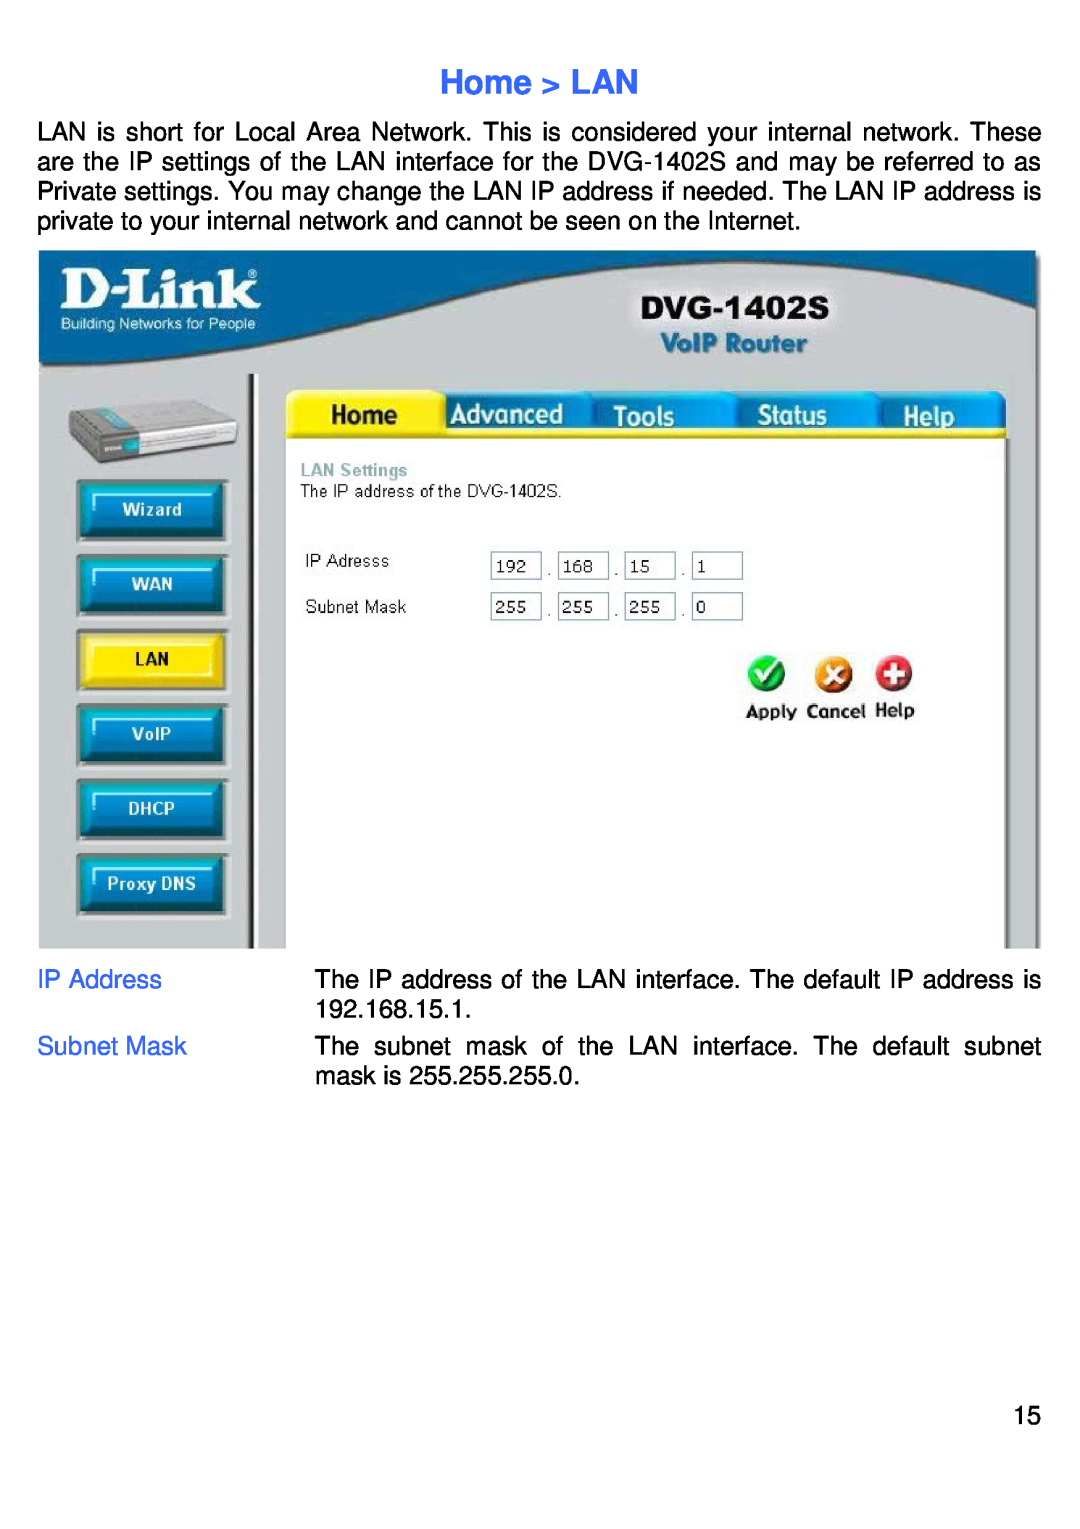 D-Link DVG-1402S manual Home LAN, IP Address, Subnet Mask 